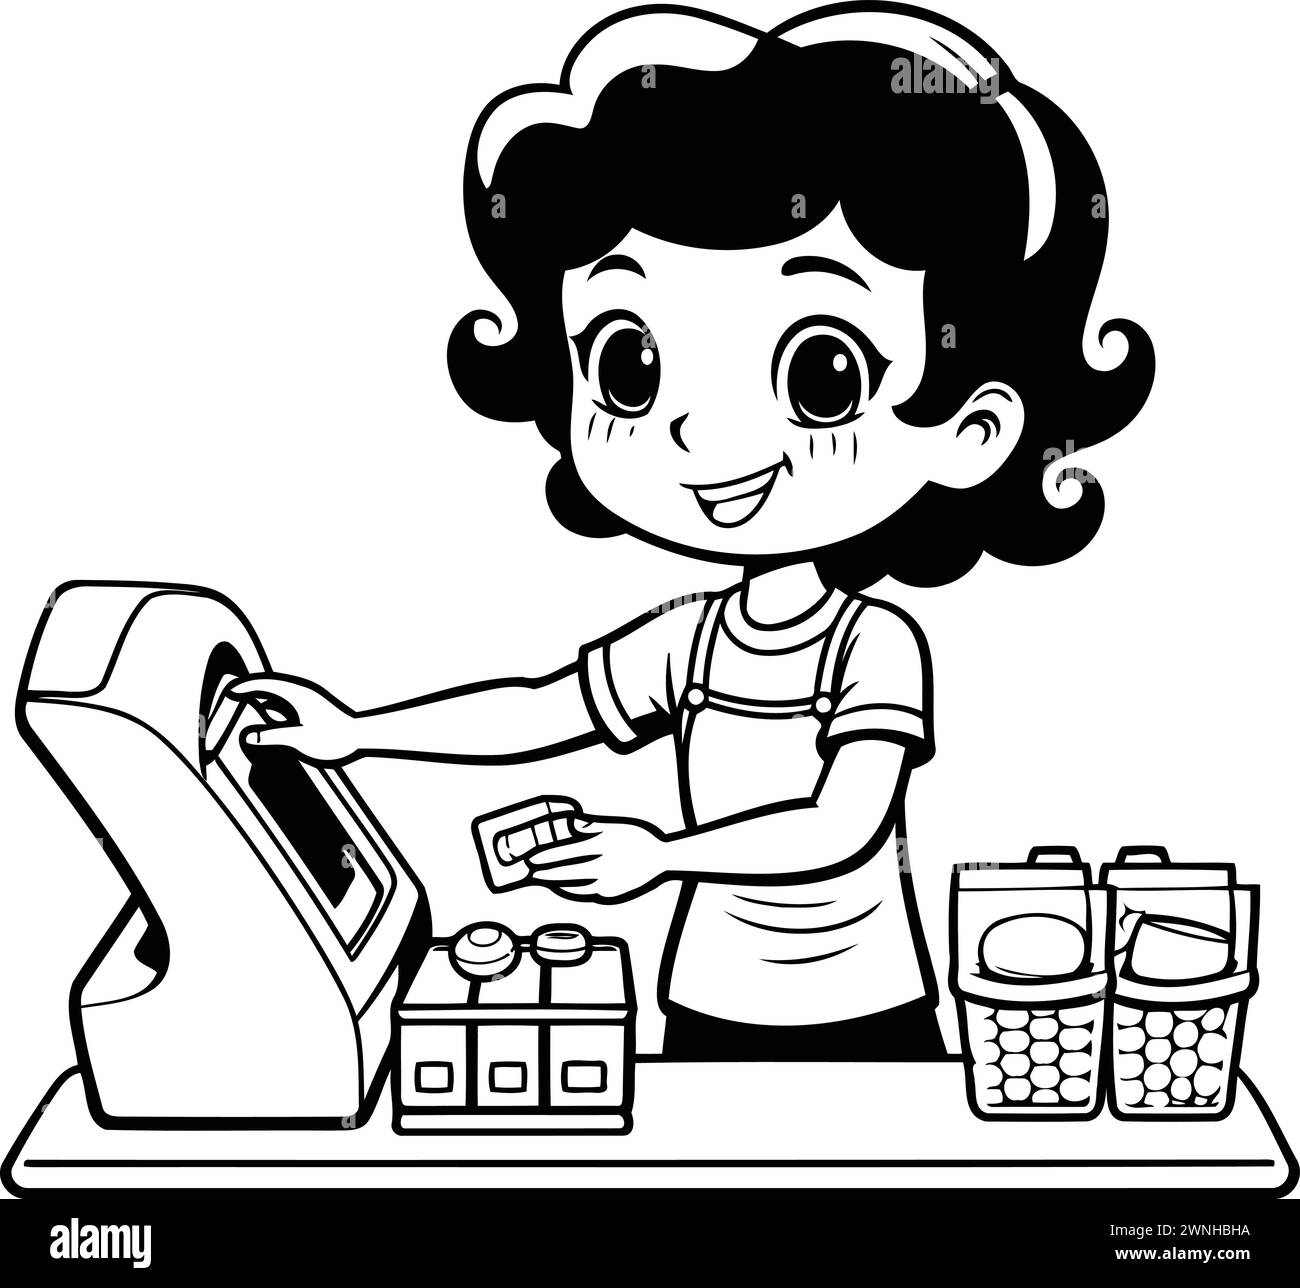 Cute little girl using a cash register. Black and white vector illustration. Stock Vector